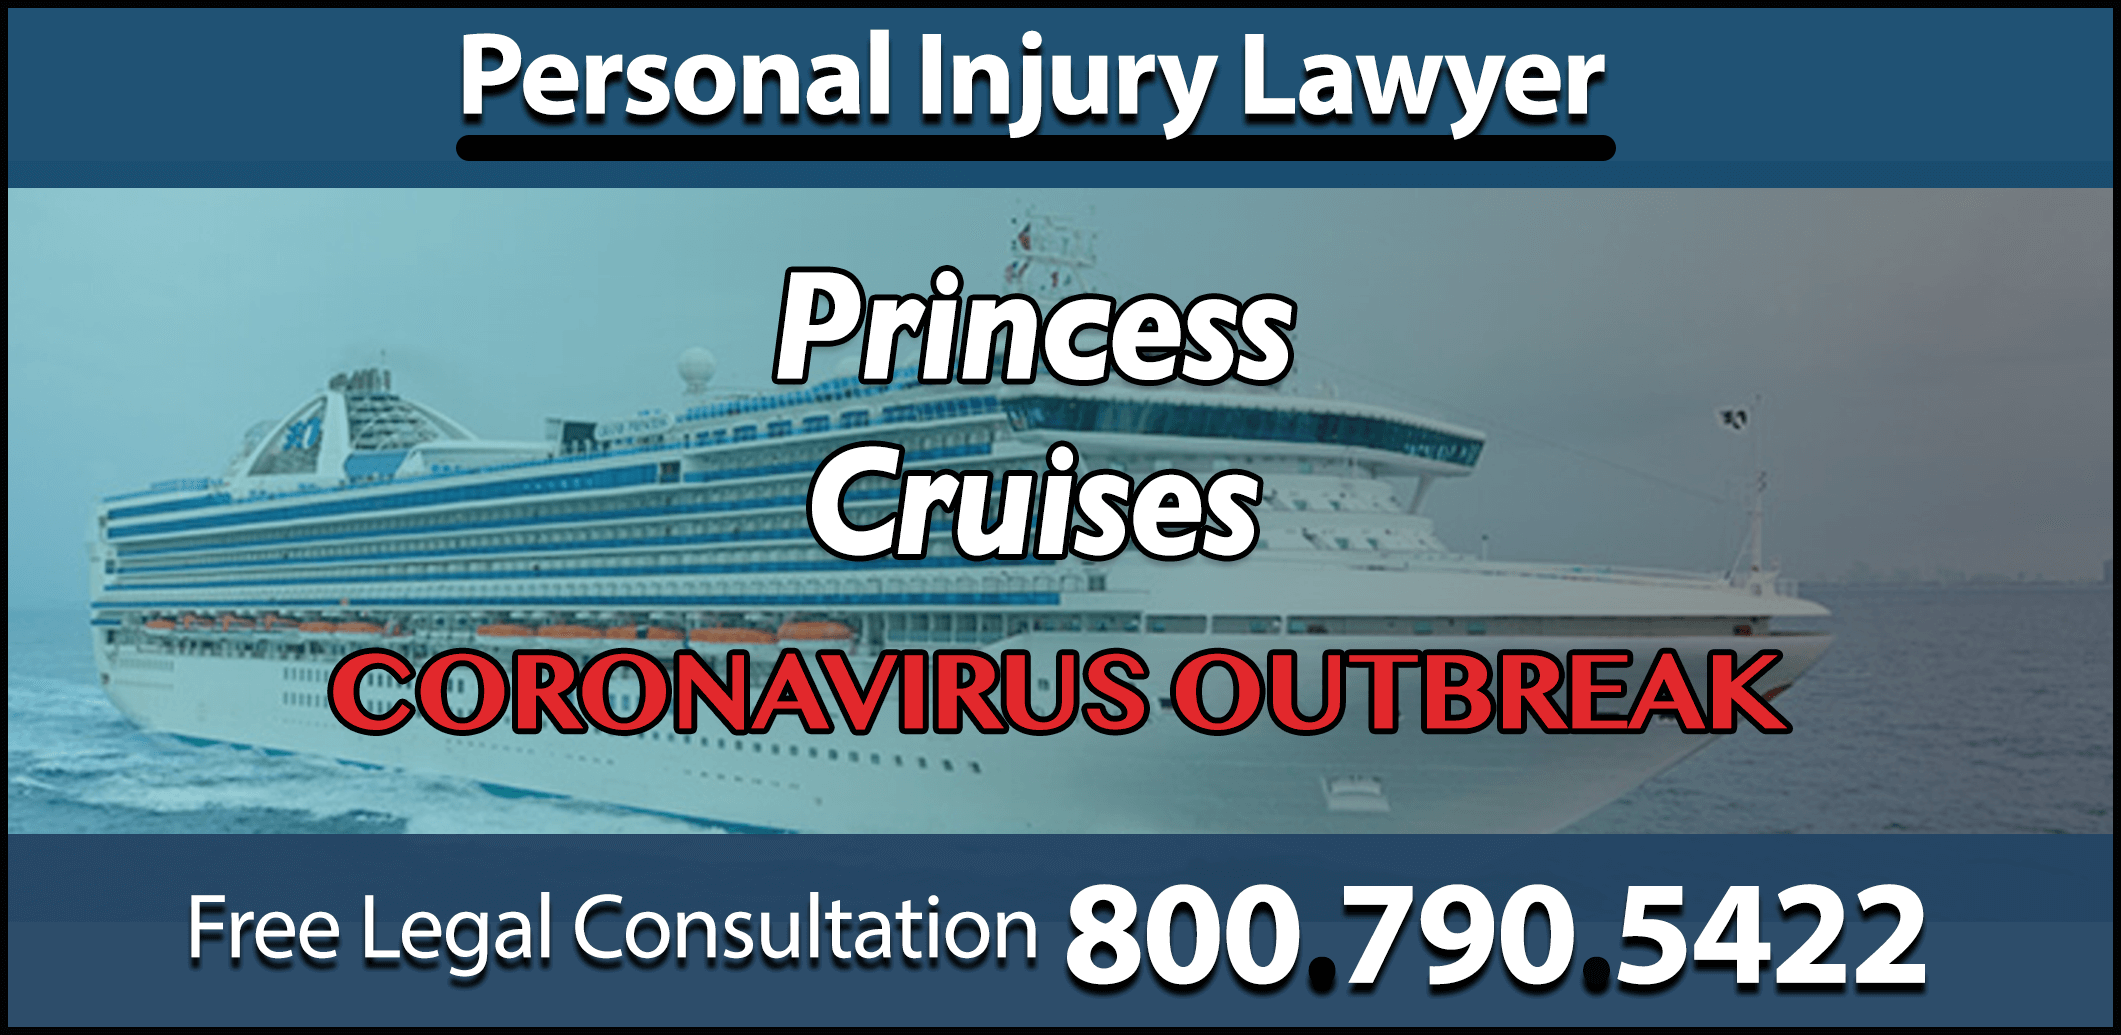 princess cruises covid19 health risk coronavirus outbreak personal injury lawyer sue maximum compensation